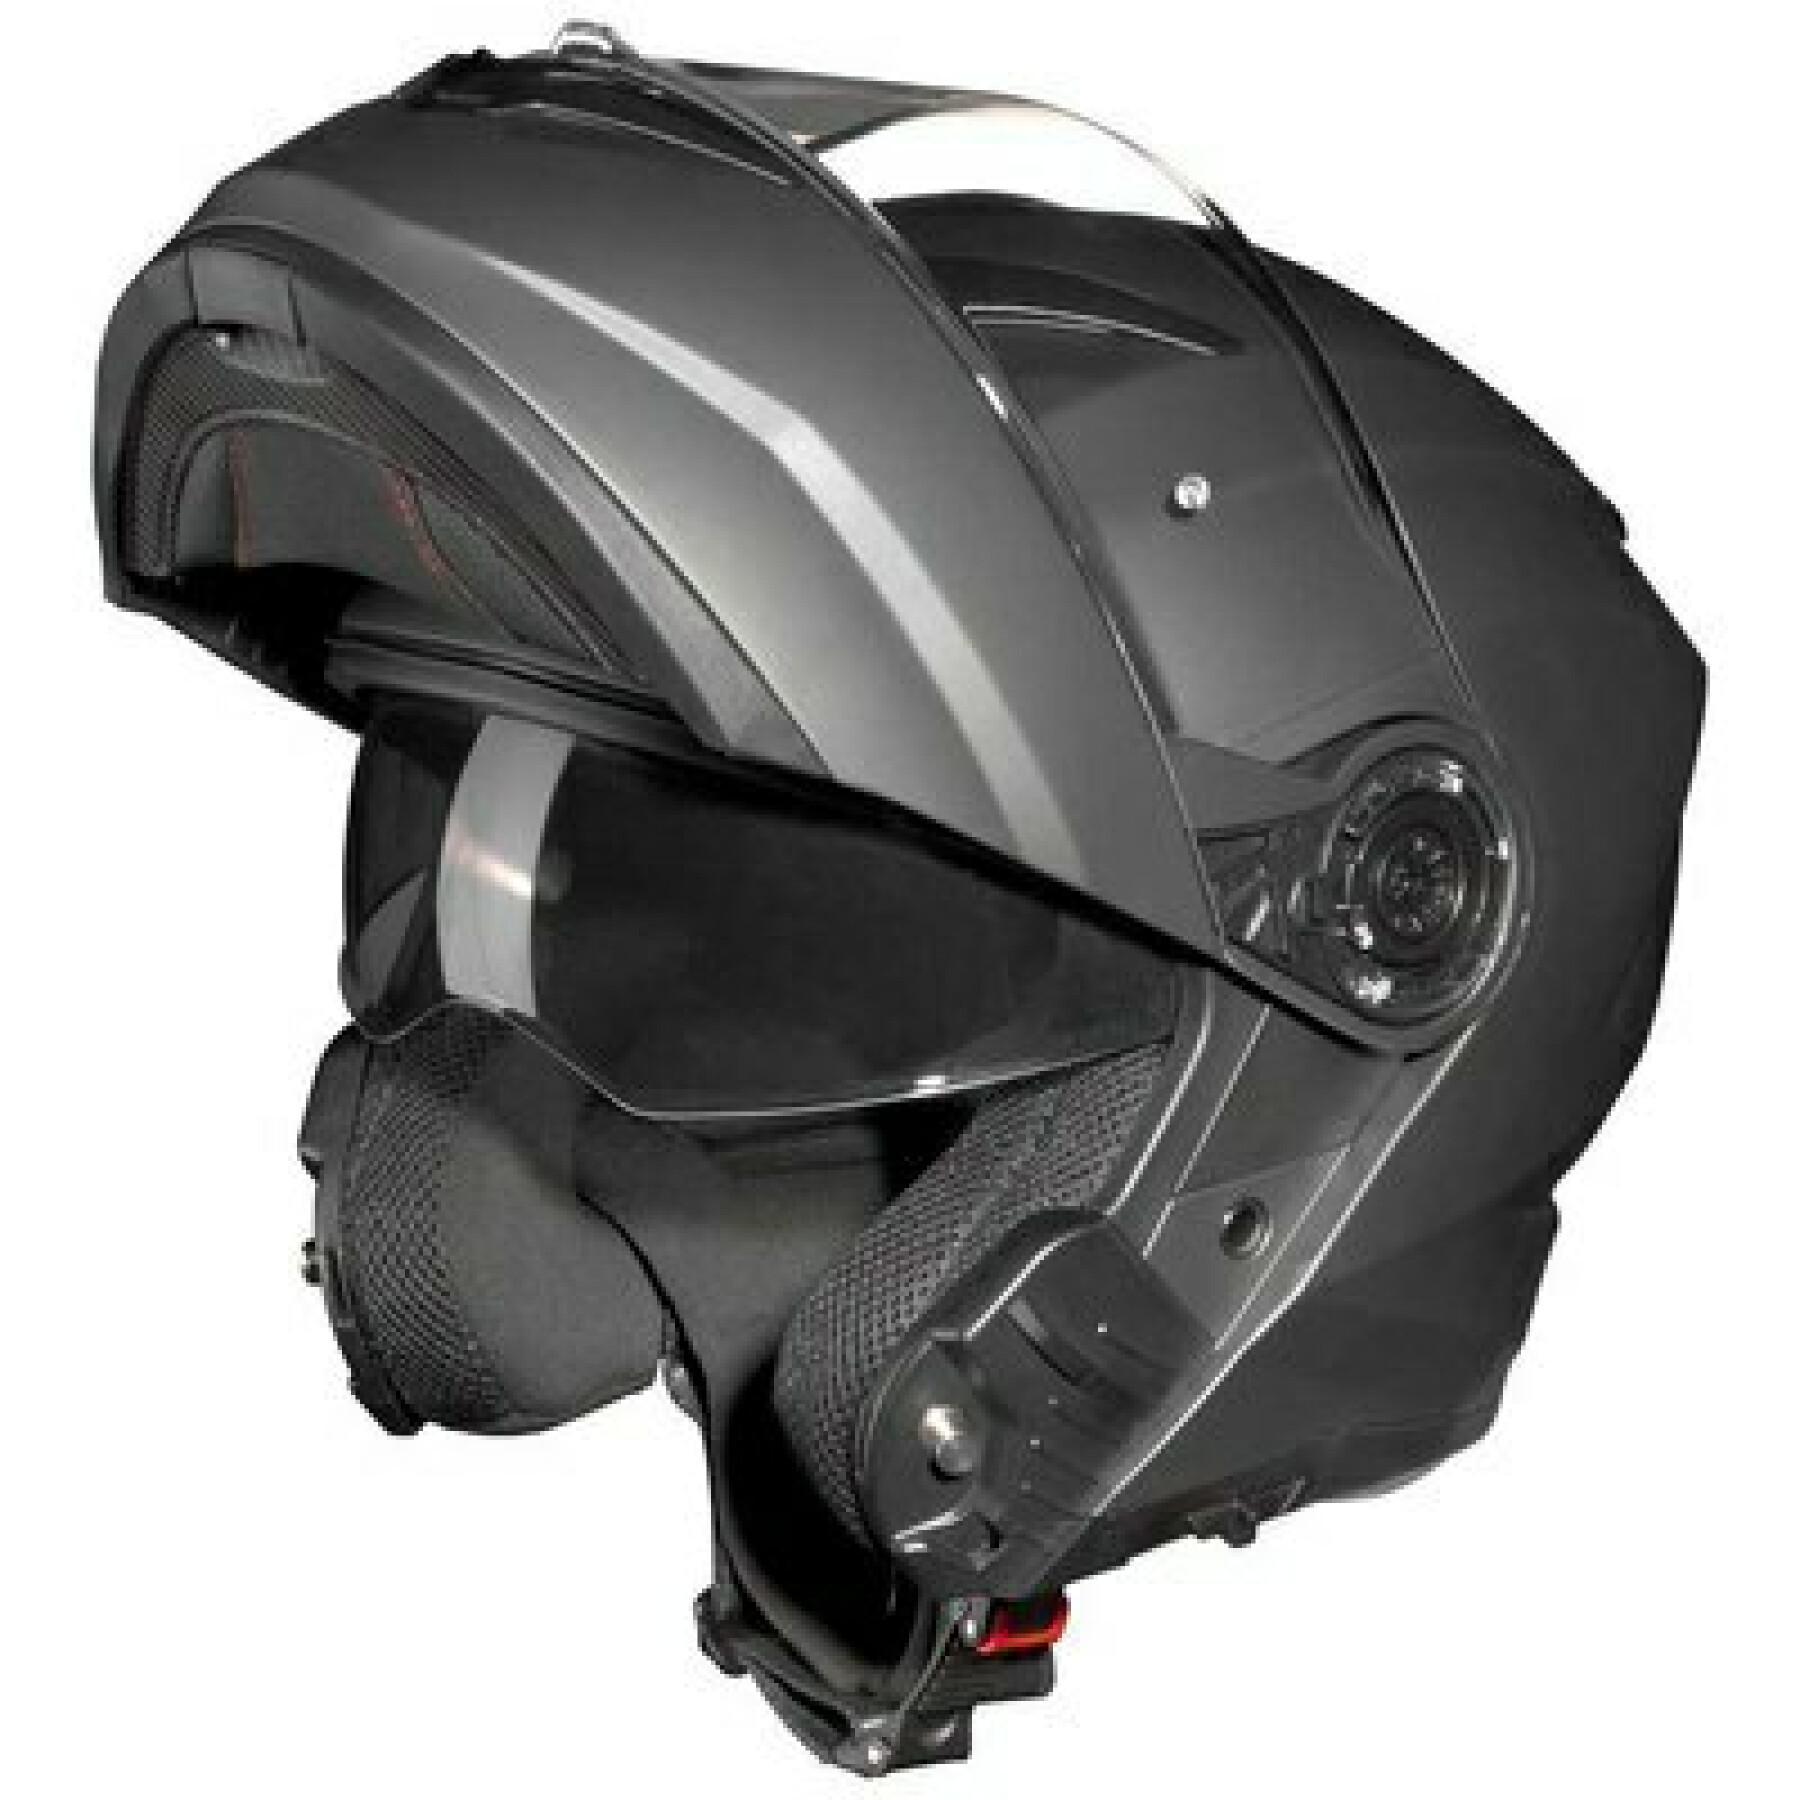 Modular motorcycle helmet Bayard fp-28 s sputnik